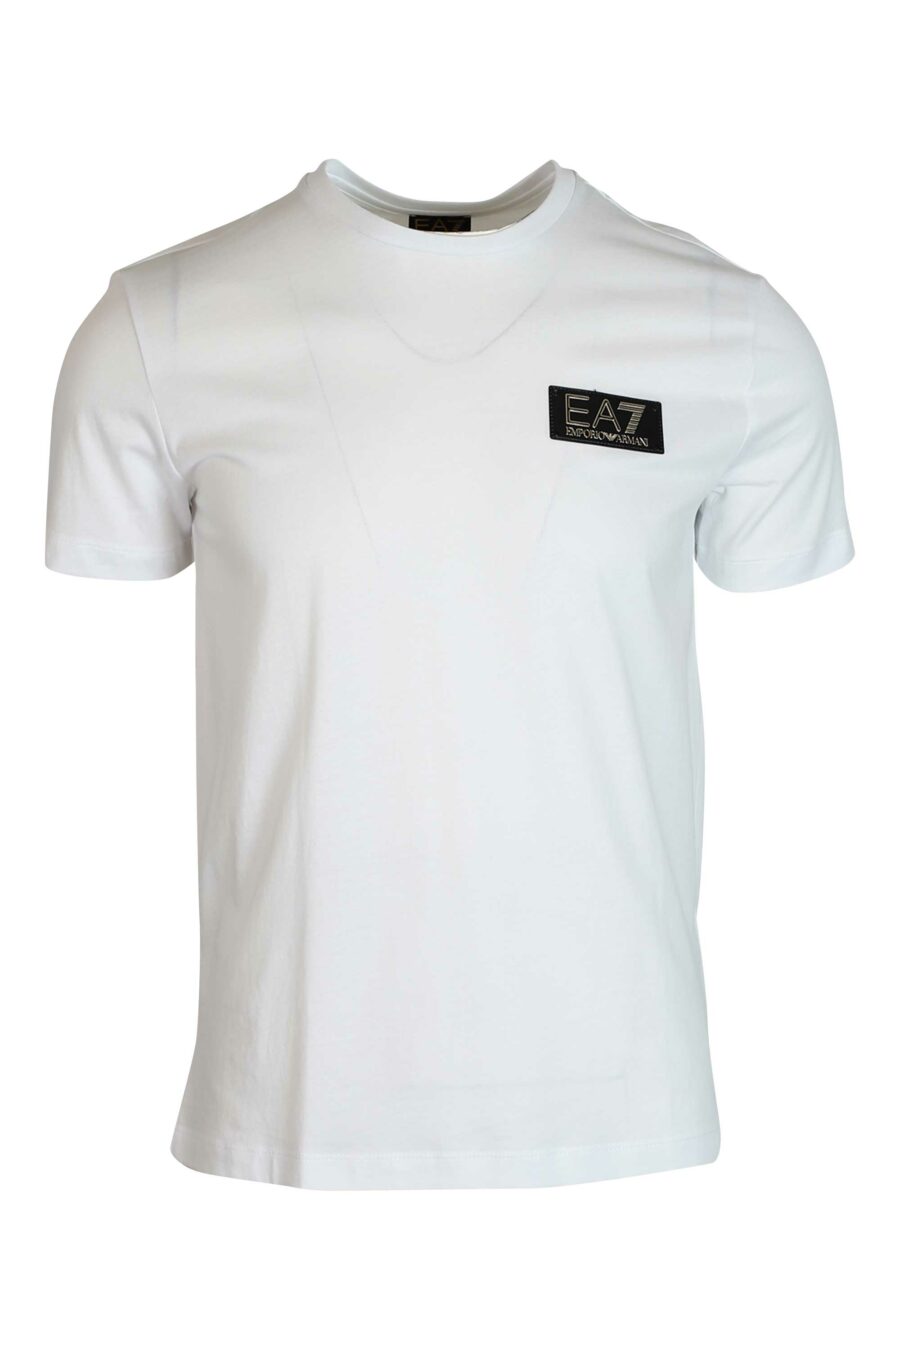 Camiseta blanca con minilogo en placa dorado - 8056787132948